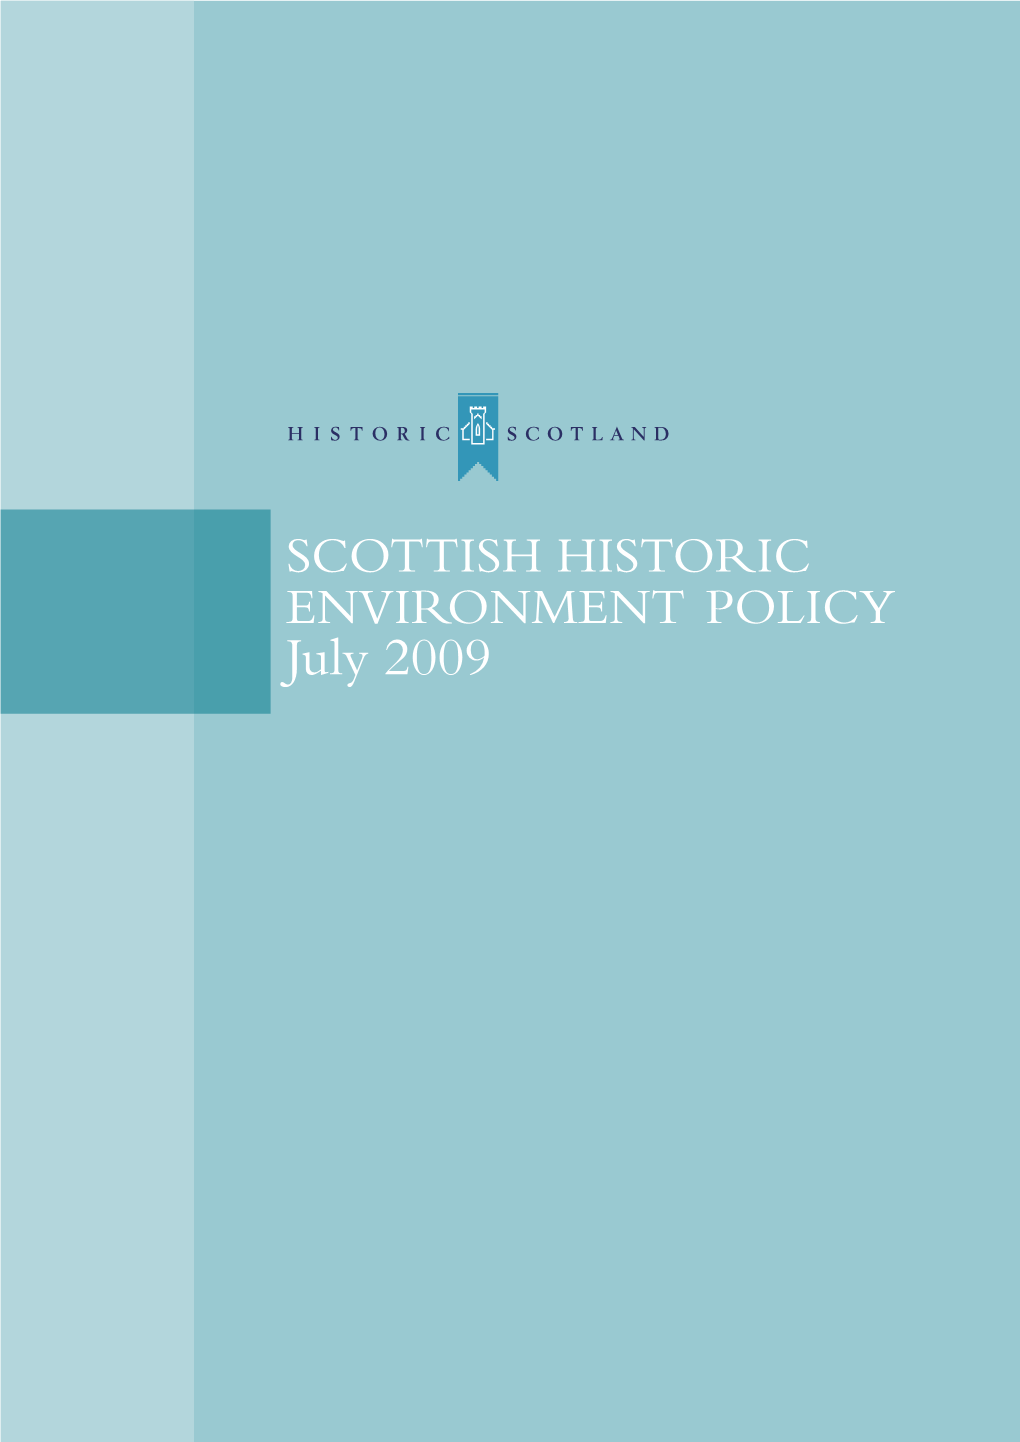 The Scottish Historic Environment Policy (SHEP)